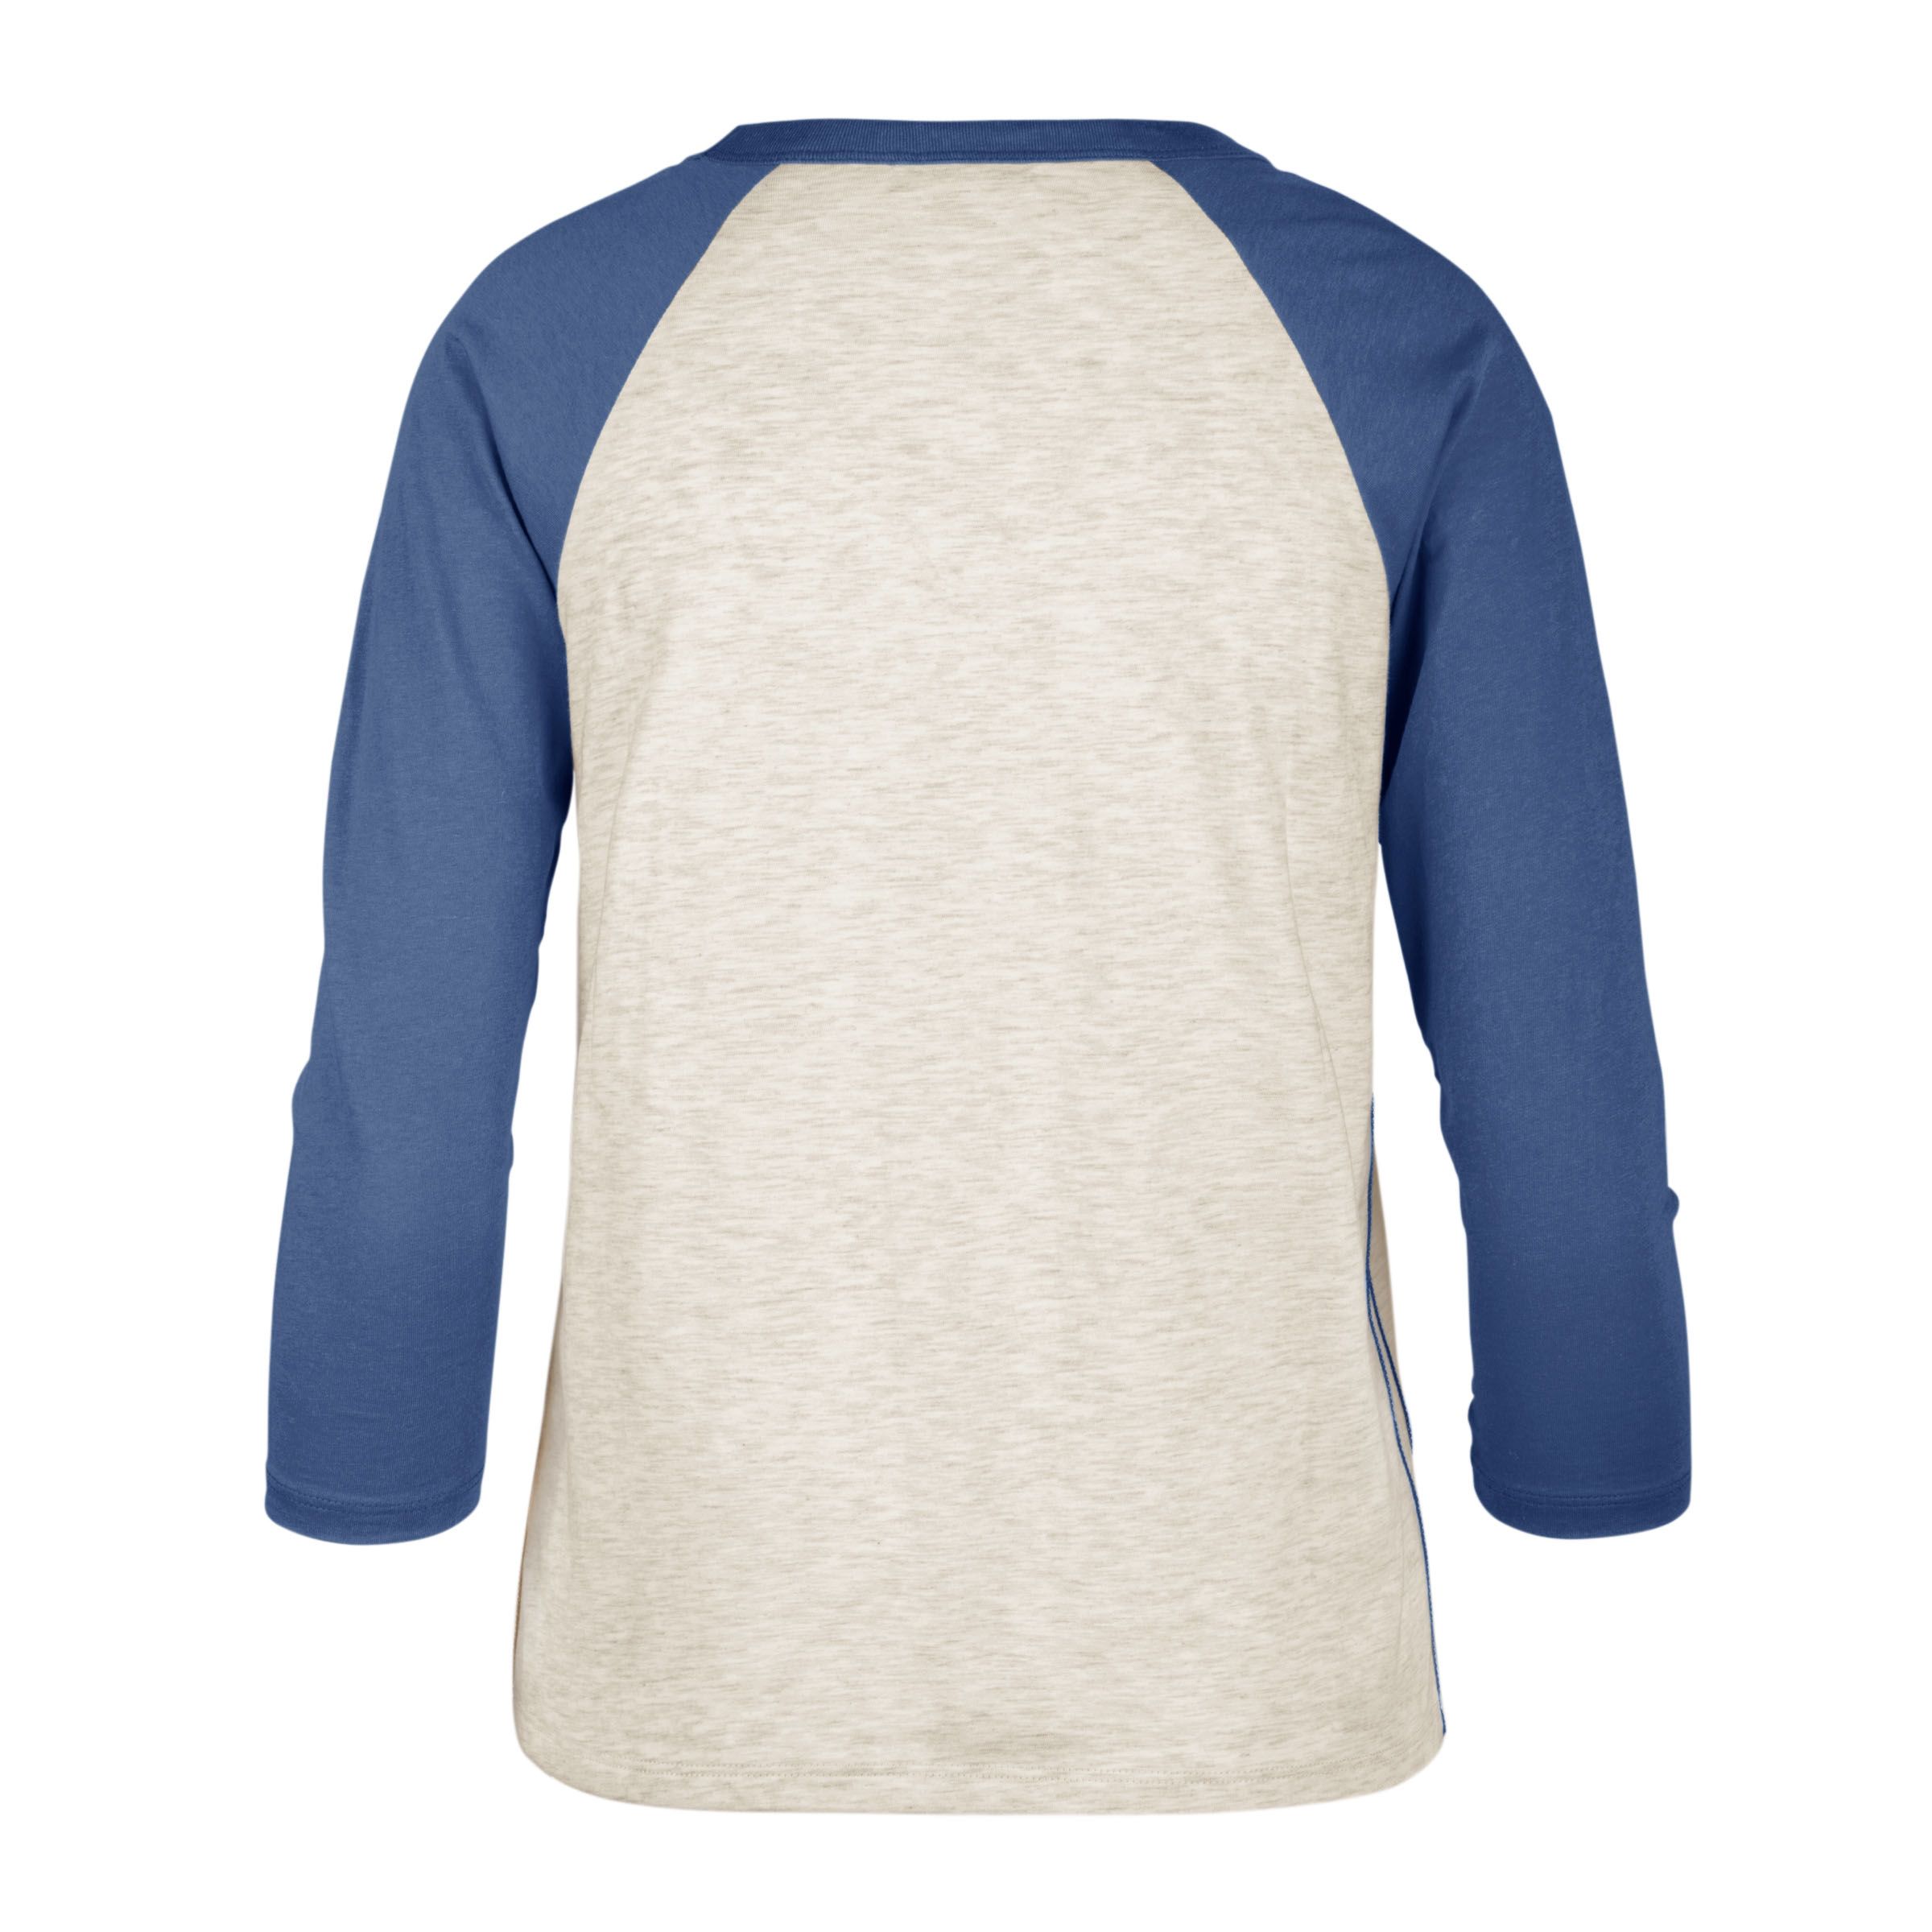 47 Brand Women's MLB Toronto Blue Jays Retro Daze 3/4 T-Shirt